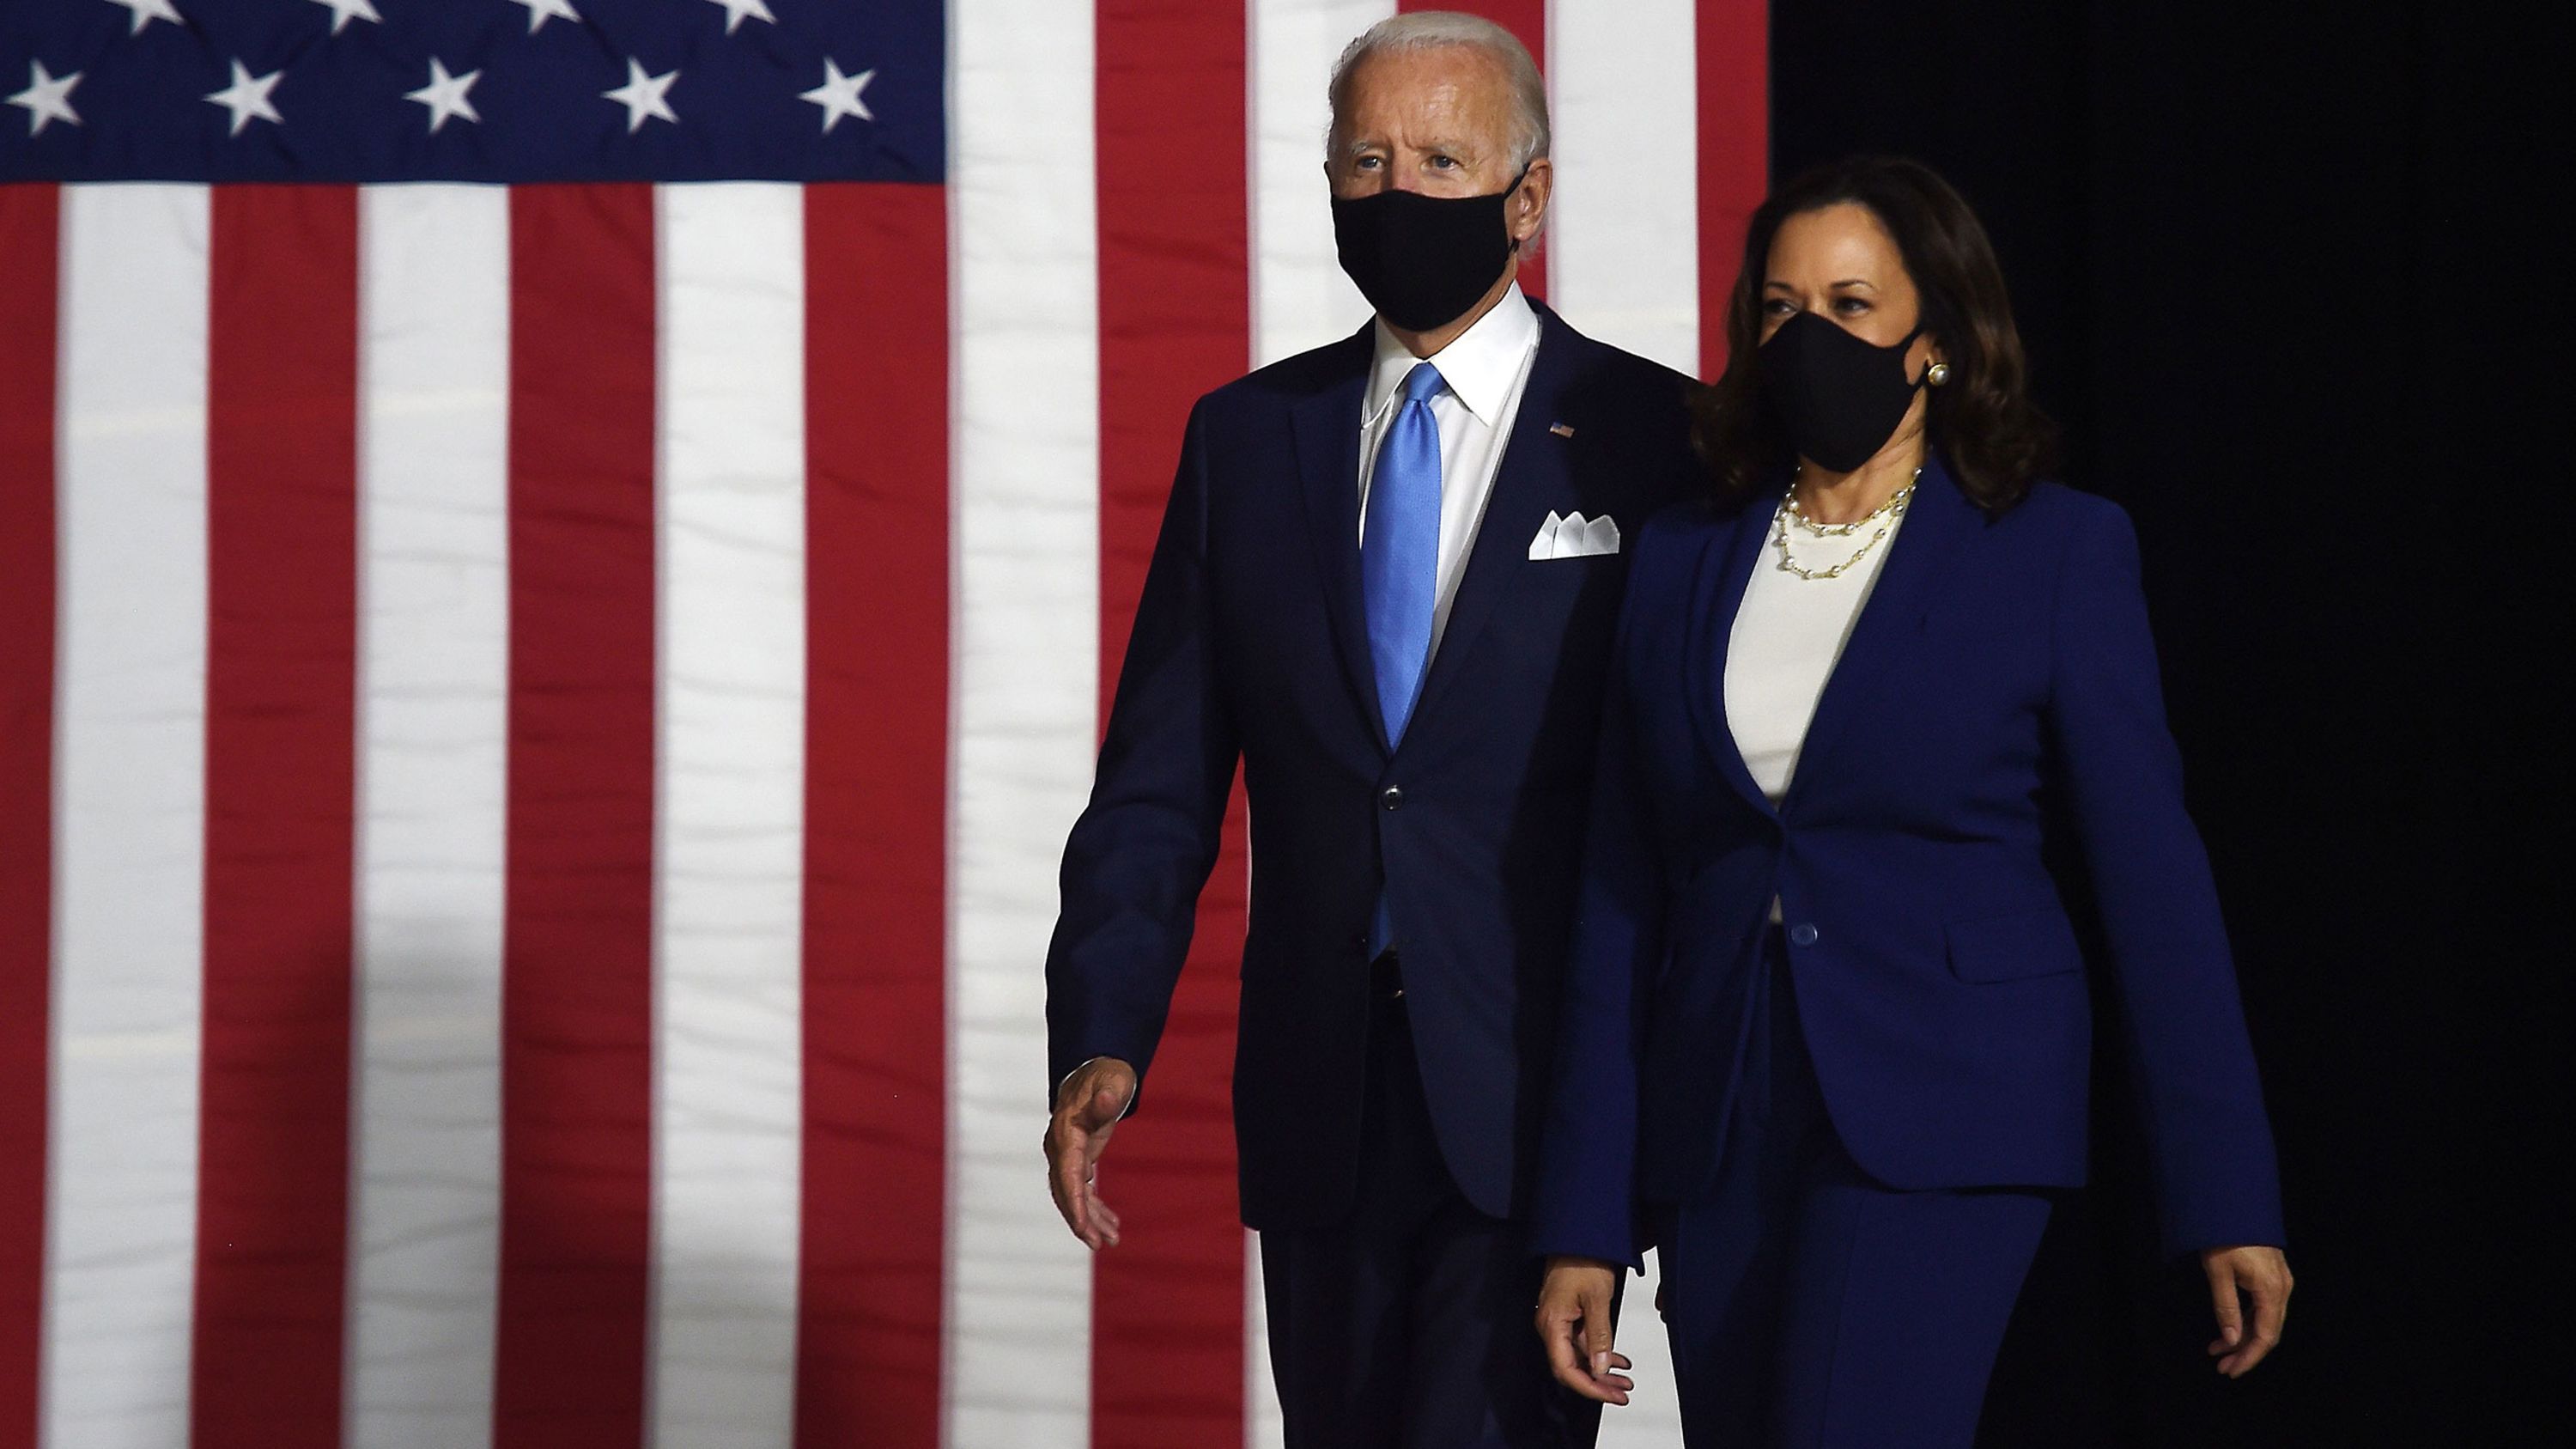 Joe Biden, the presumptive Democratic presidential nominee, walks out with his running mate, US Sen. Kamala Harris, on Wednesday, August 12.